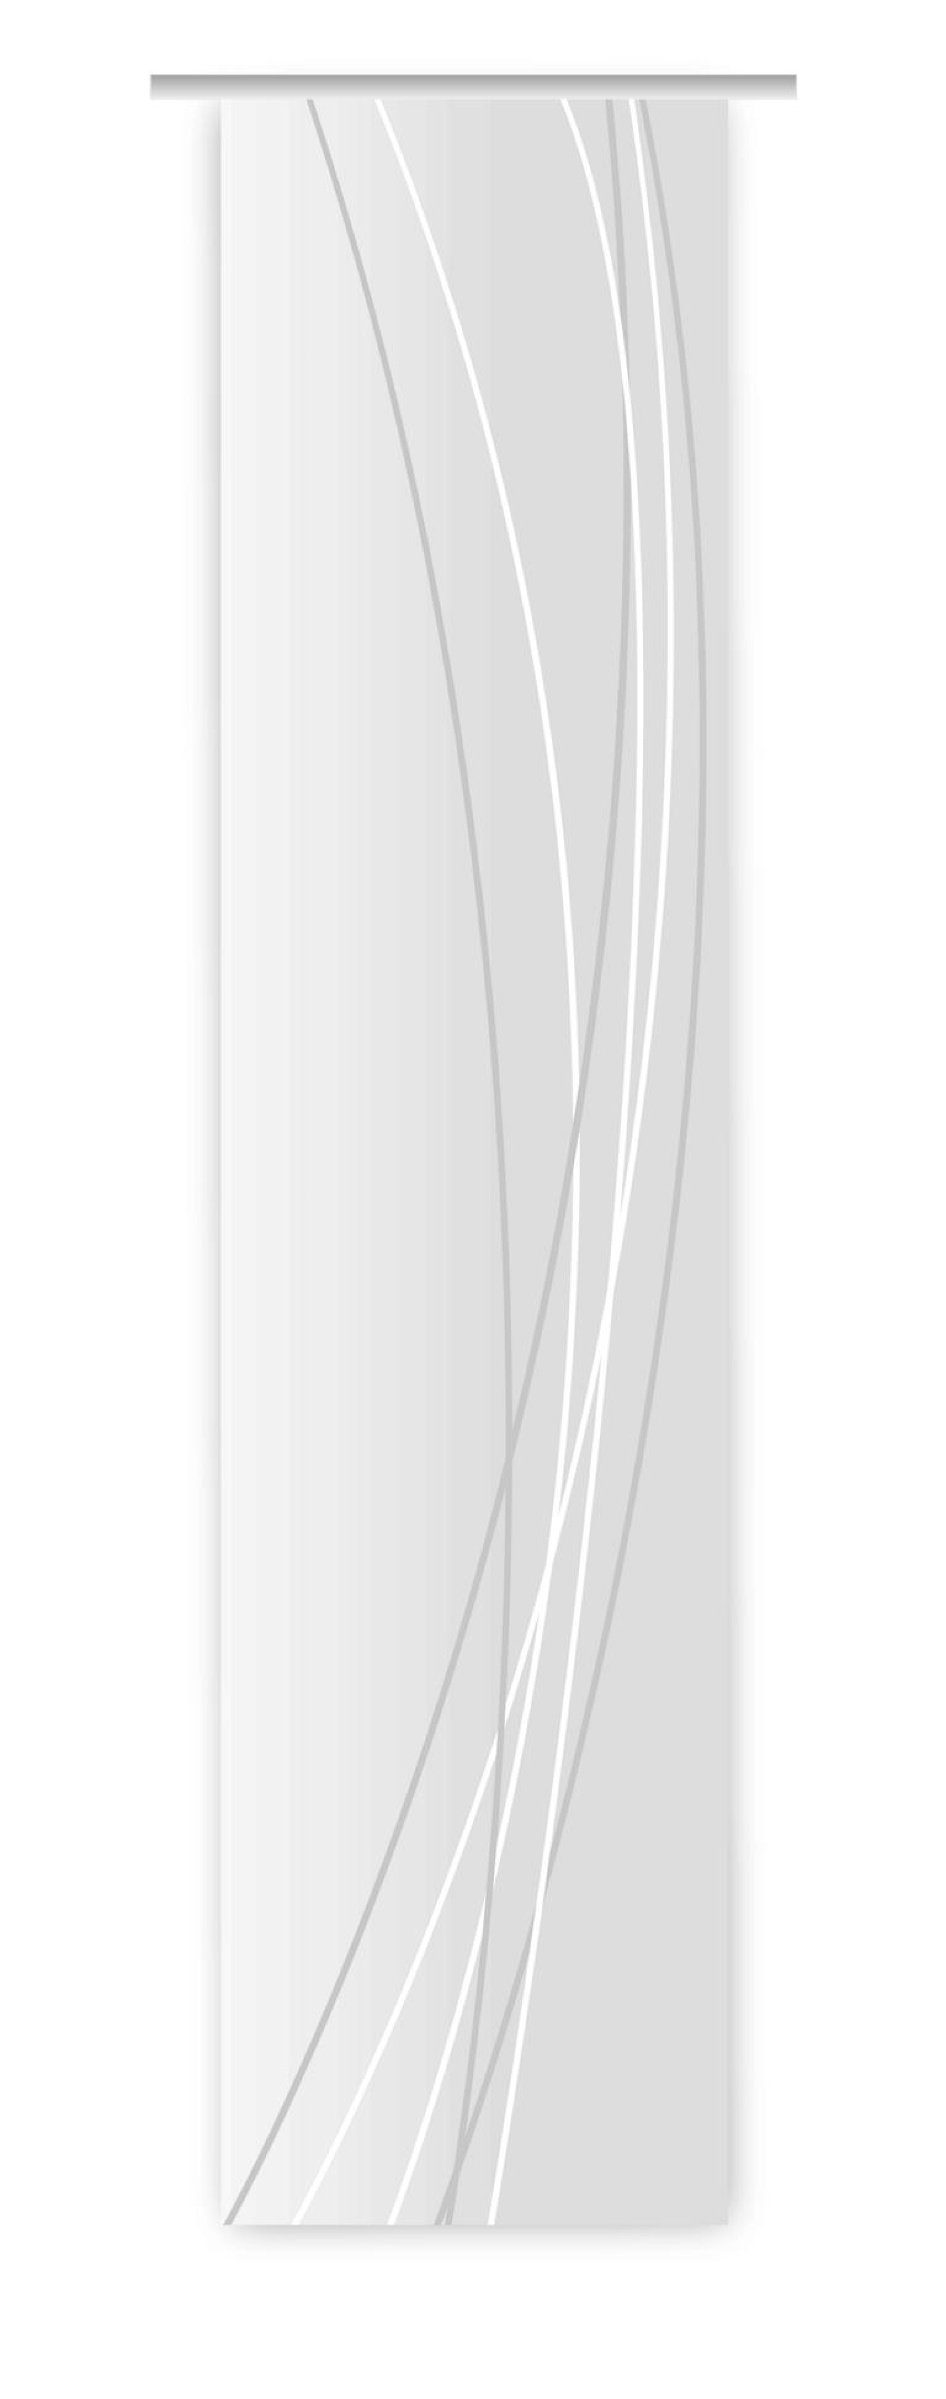 Schiebegardine - 260x60 cm hellgrau Schiebevorhang rechts gardinen-for-life HxB B-line, Linea dark